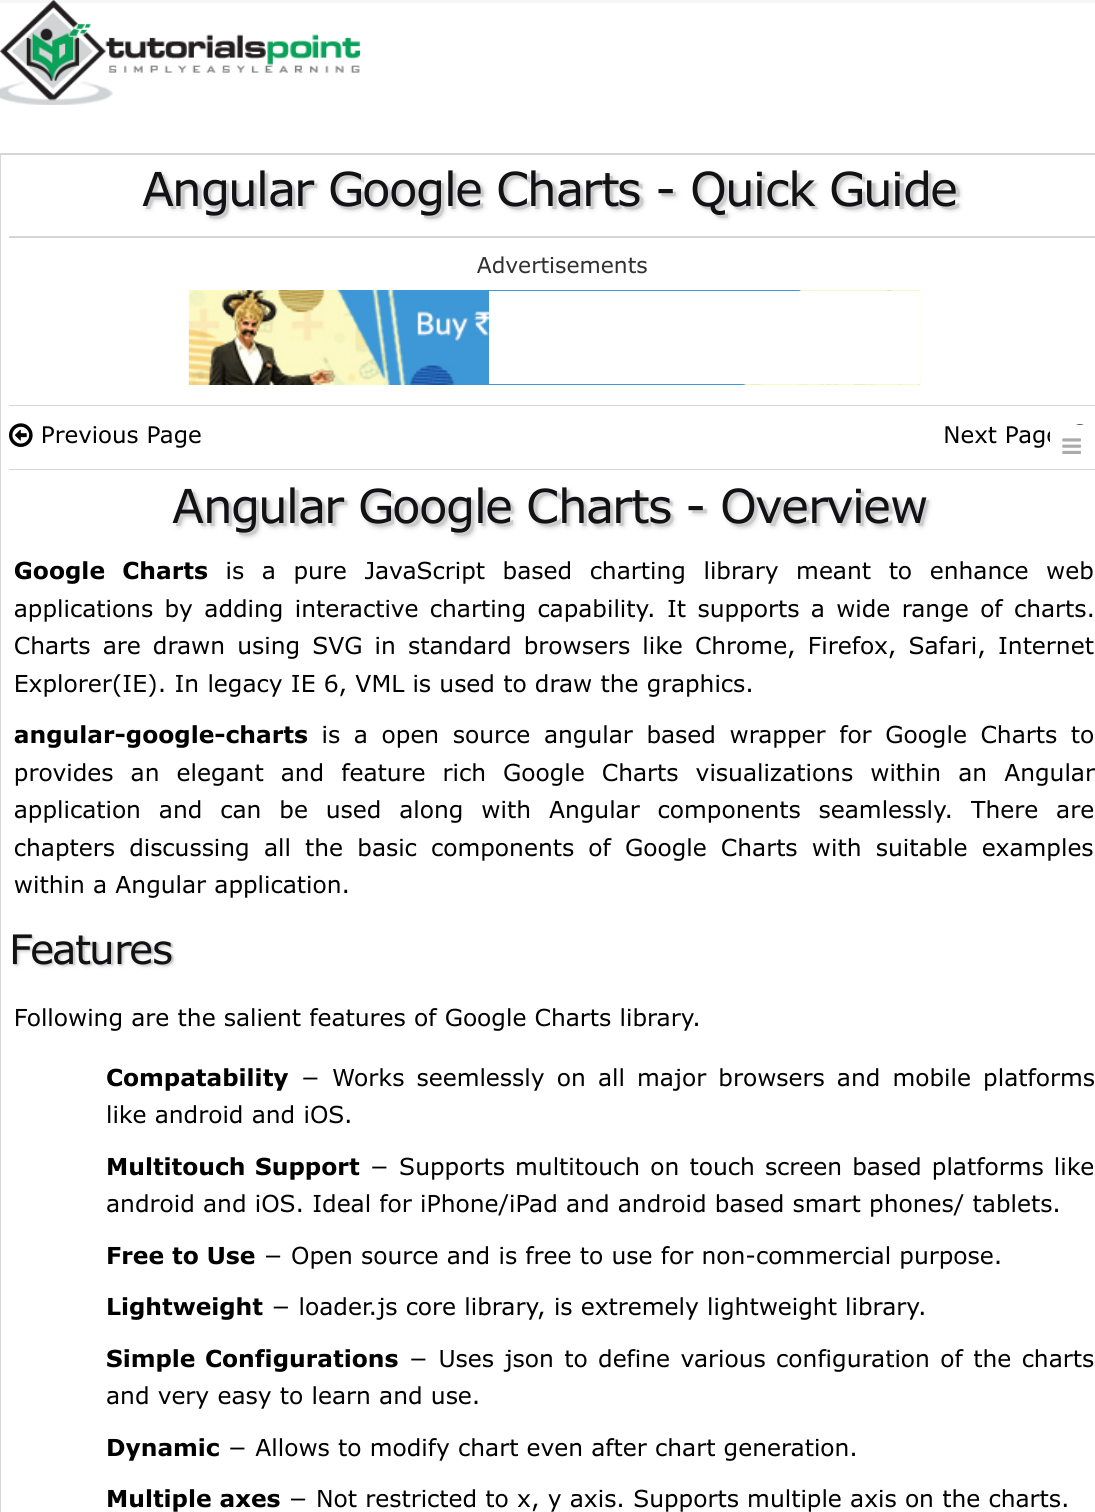 Angular Google Charts